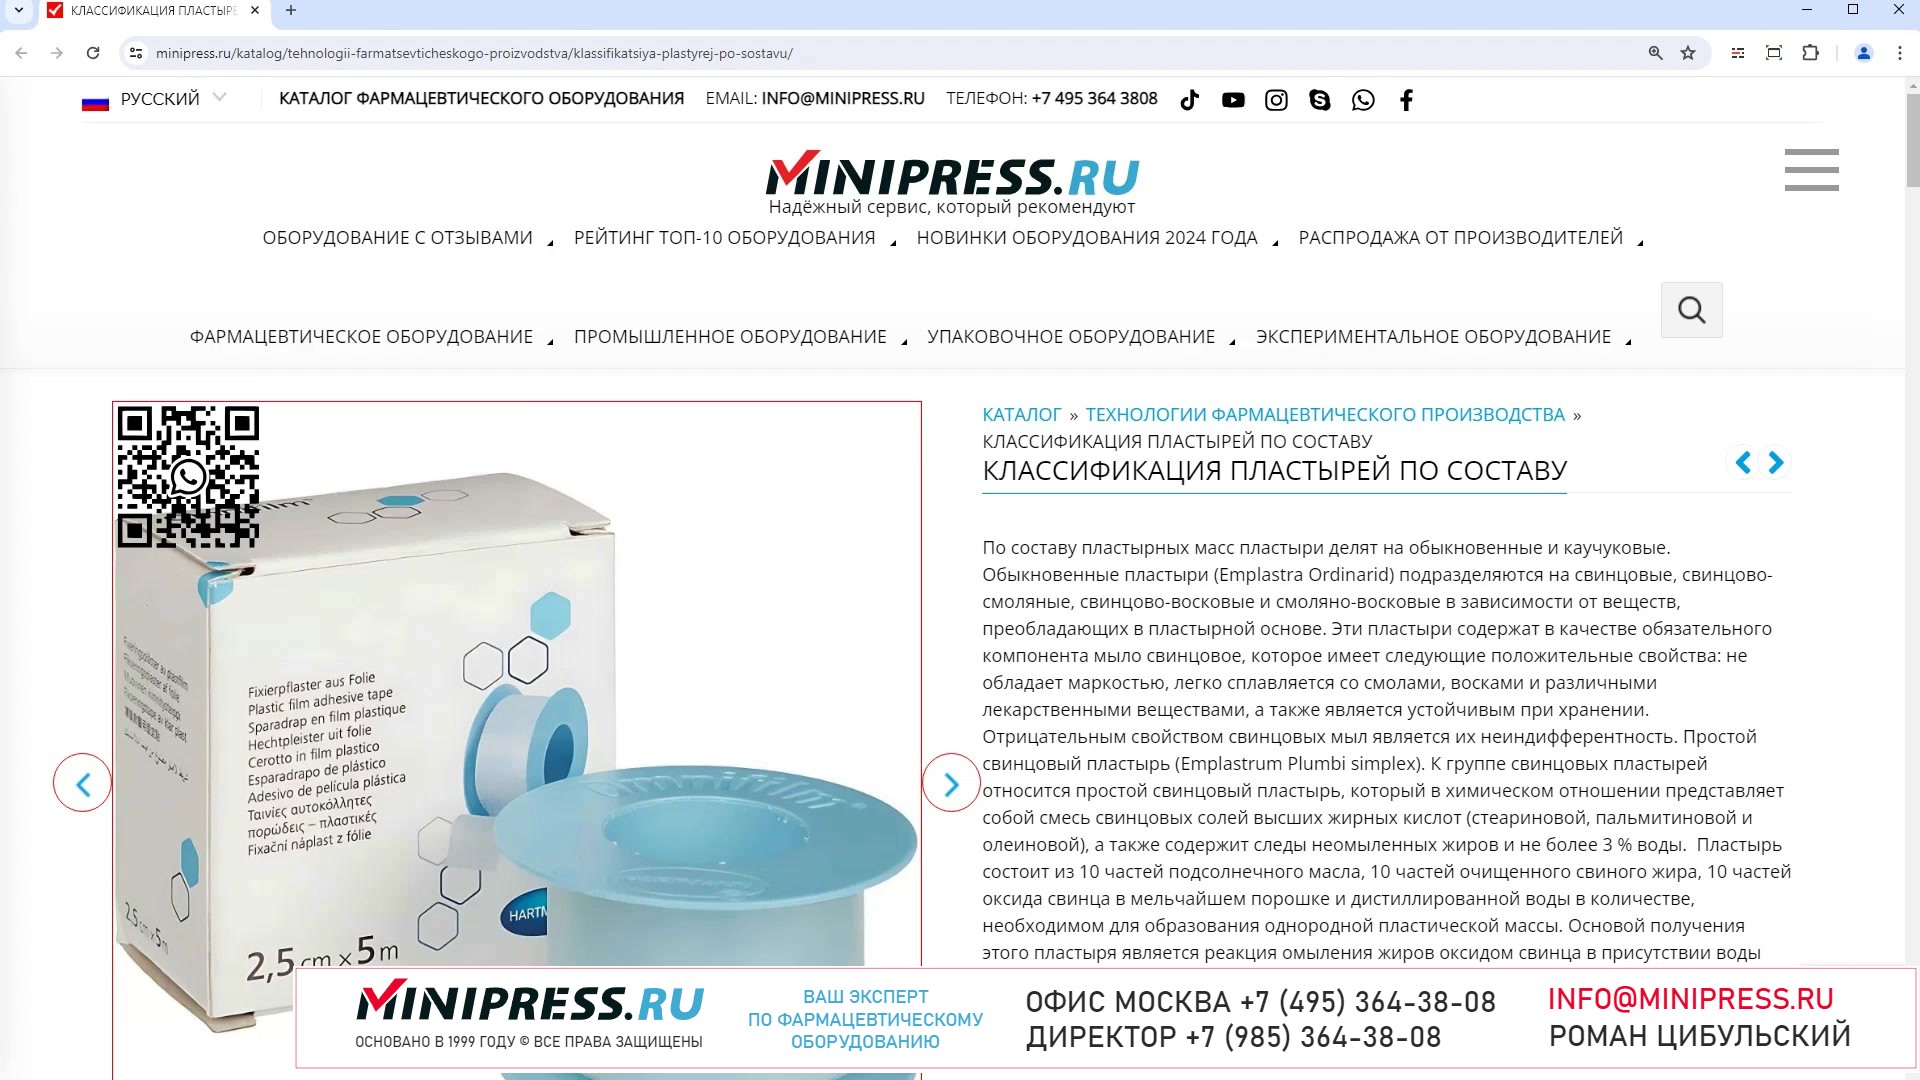 Minipress.ru Классификация пластырей по составу